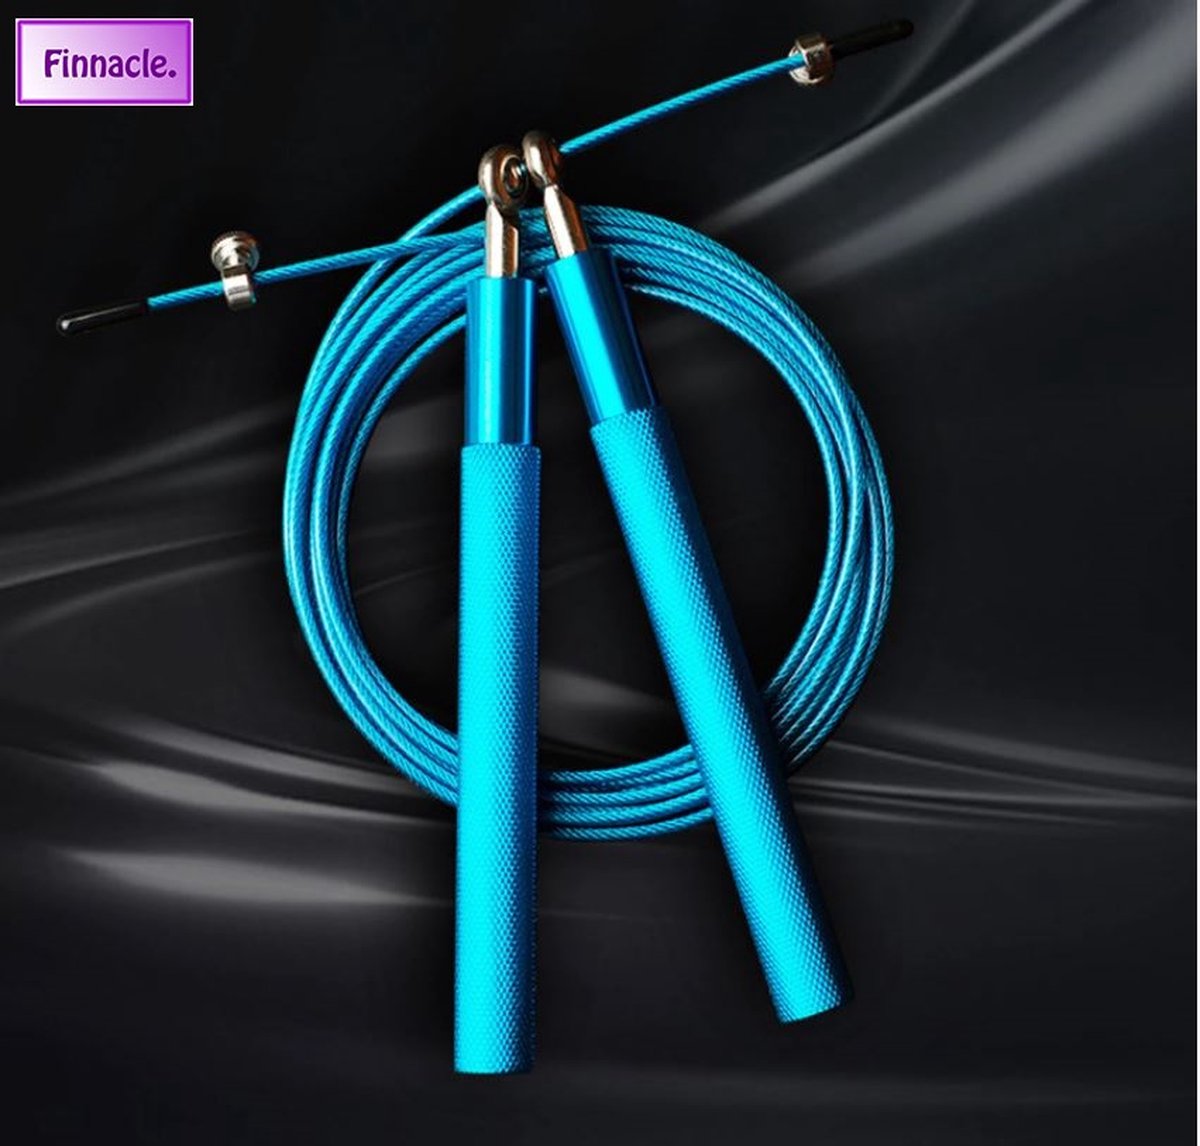 Finnacle - Springtouw - Jump rope - Crossfit - Hoge Snelheid - Duurzaam Staal Slijtvast ontwerp - Blauw